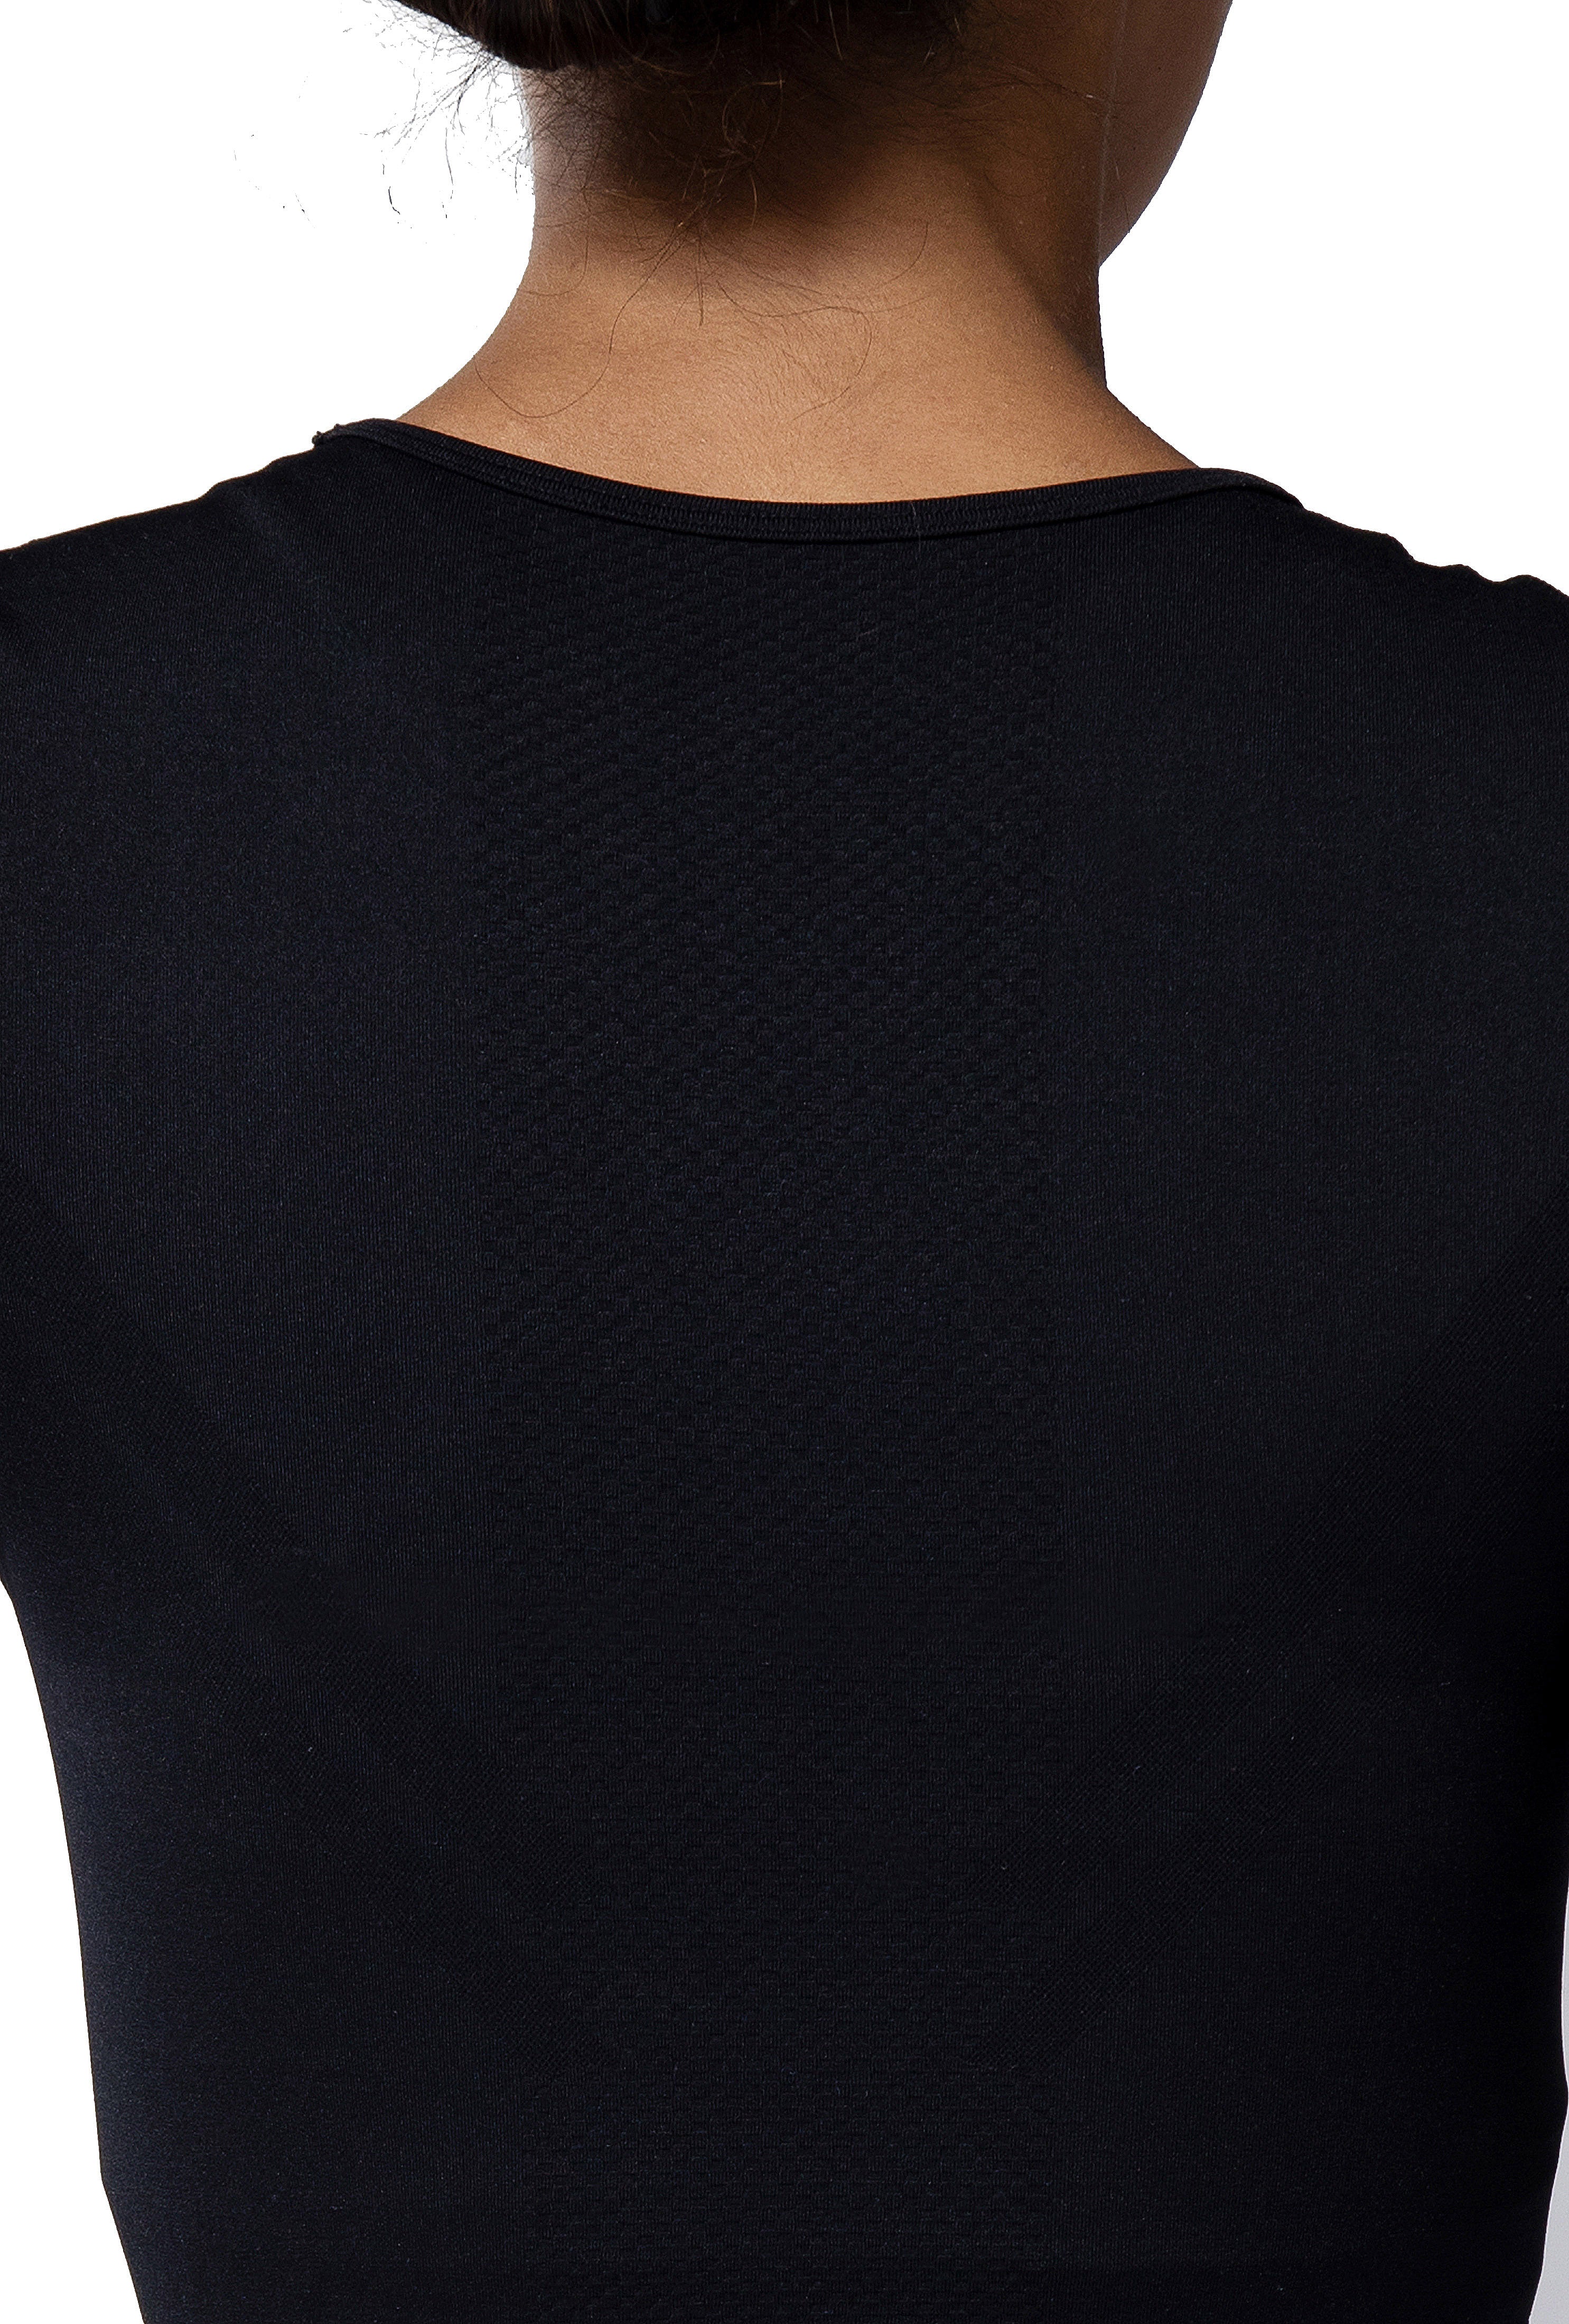 Comfy Seamless Tops Long Sleeve Black (4)